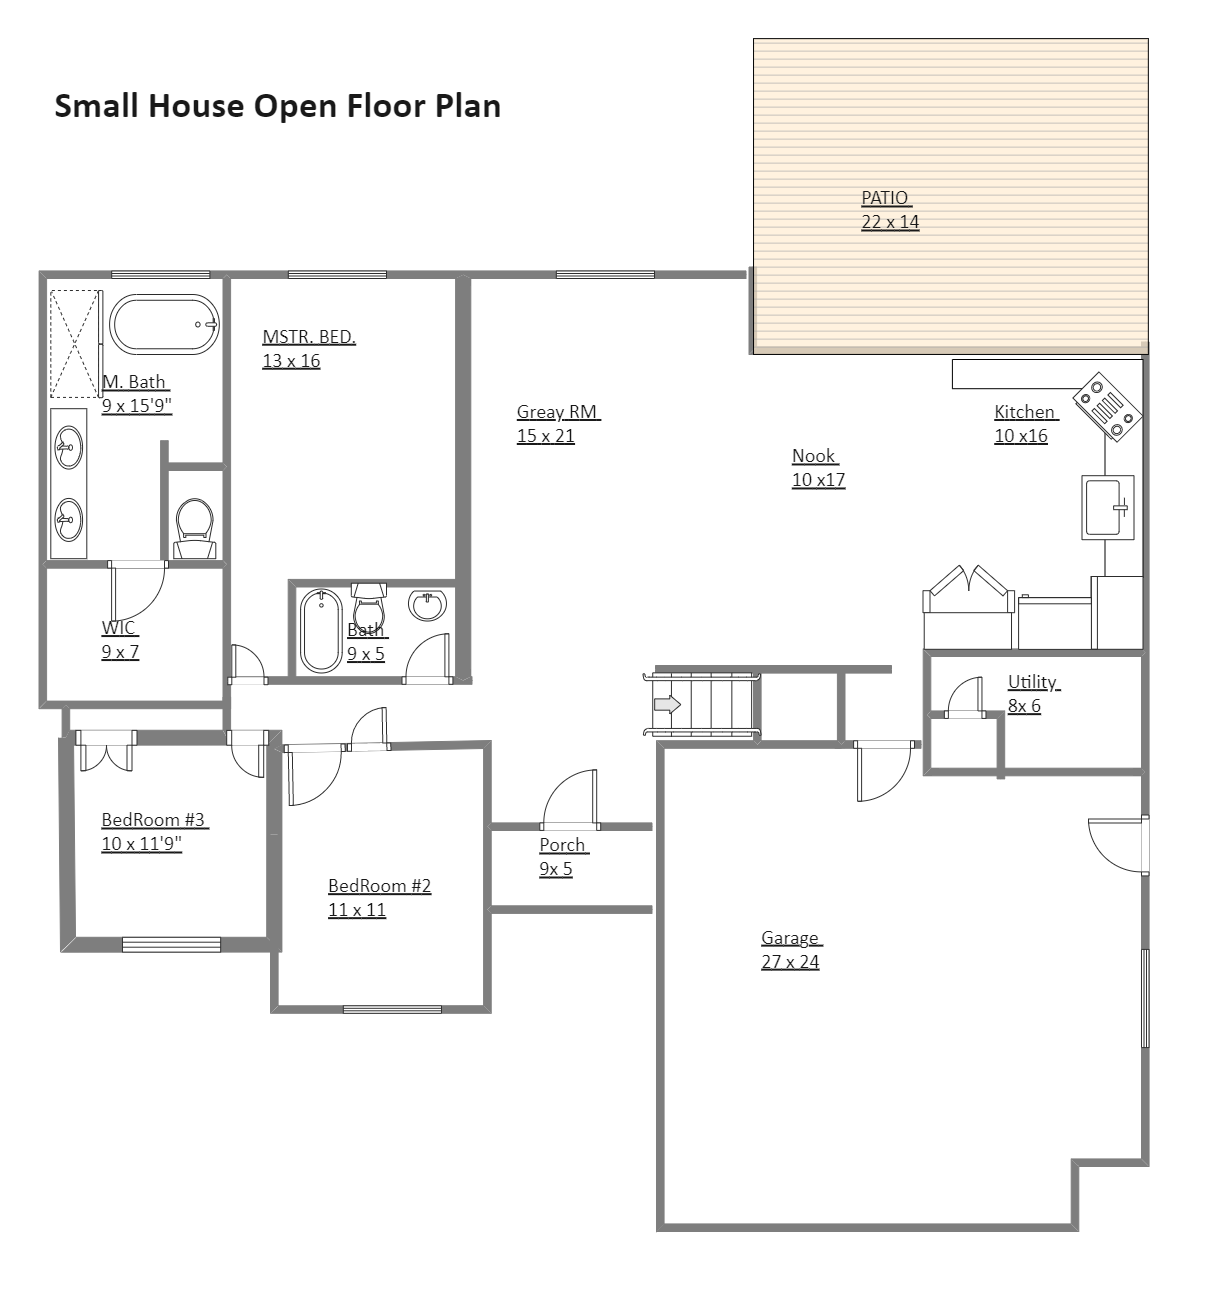 Small House Open Floor Plan